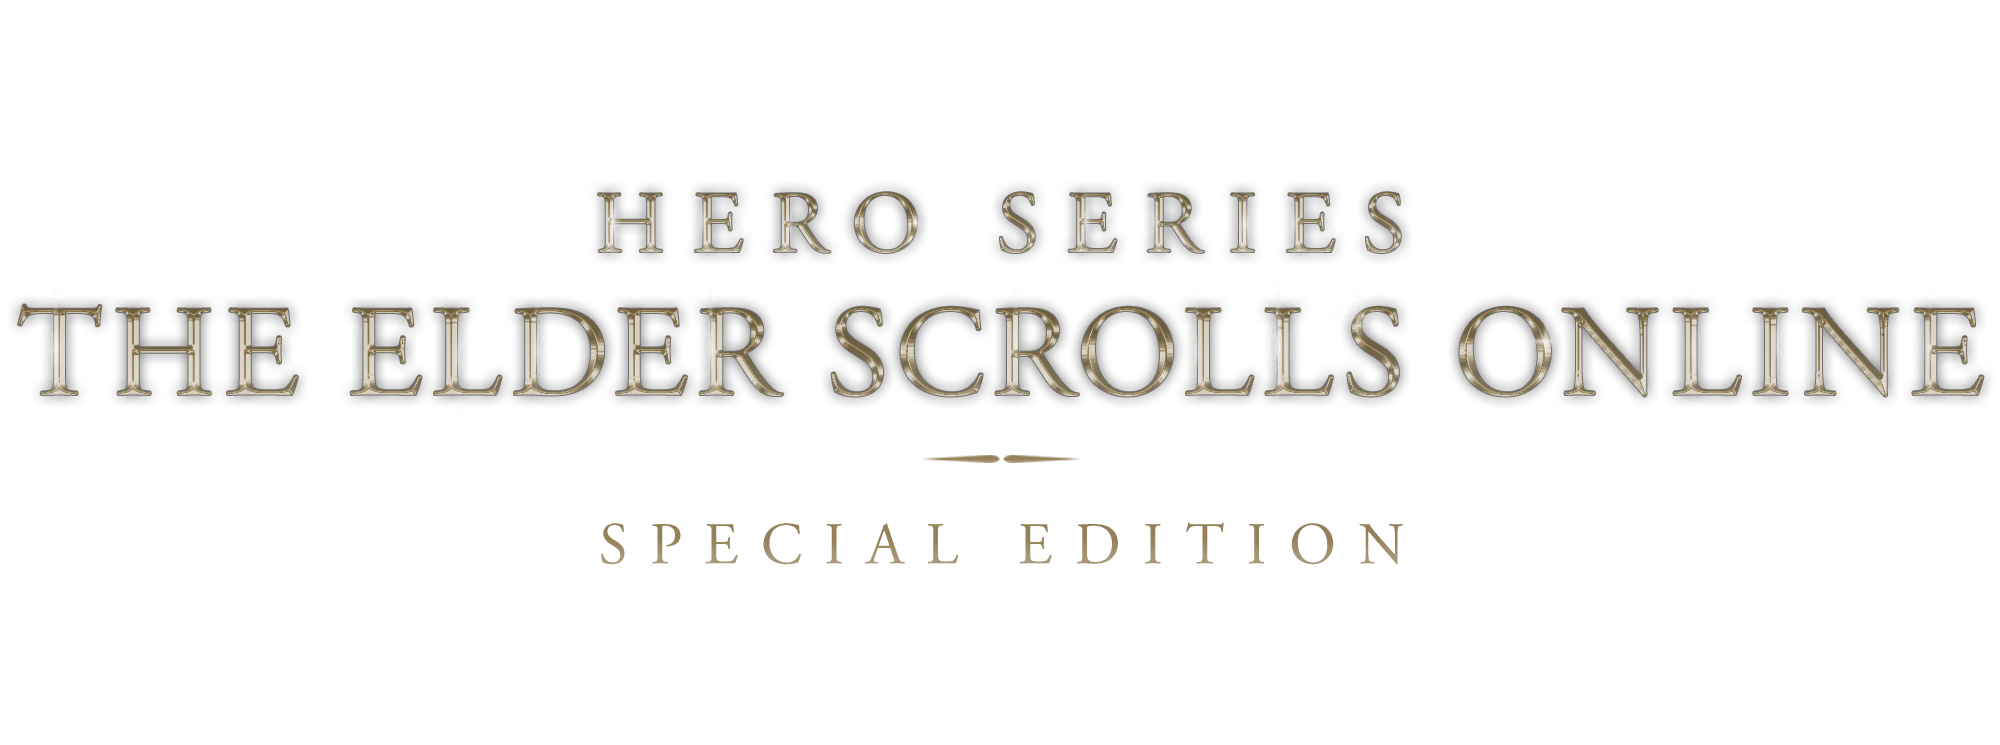 noblechairs HERO Elder Scrolls Online Edition title logo